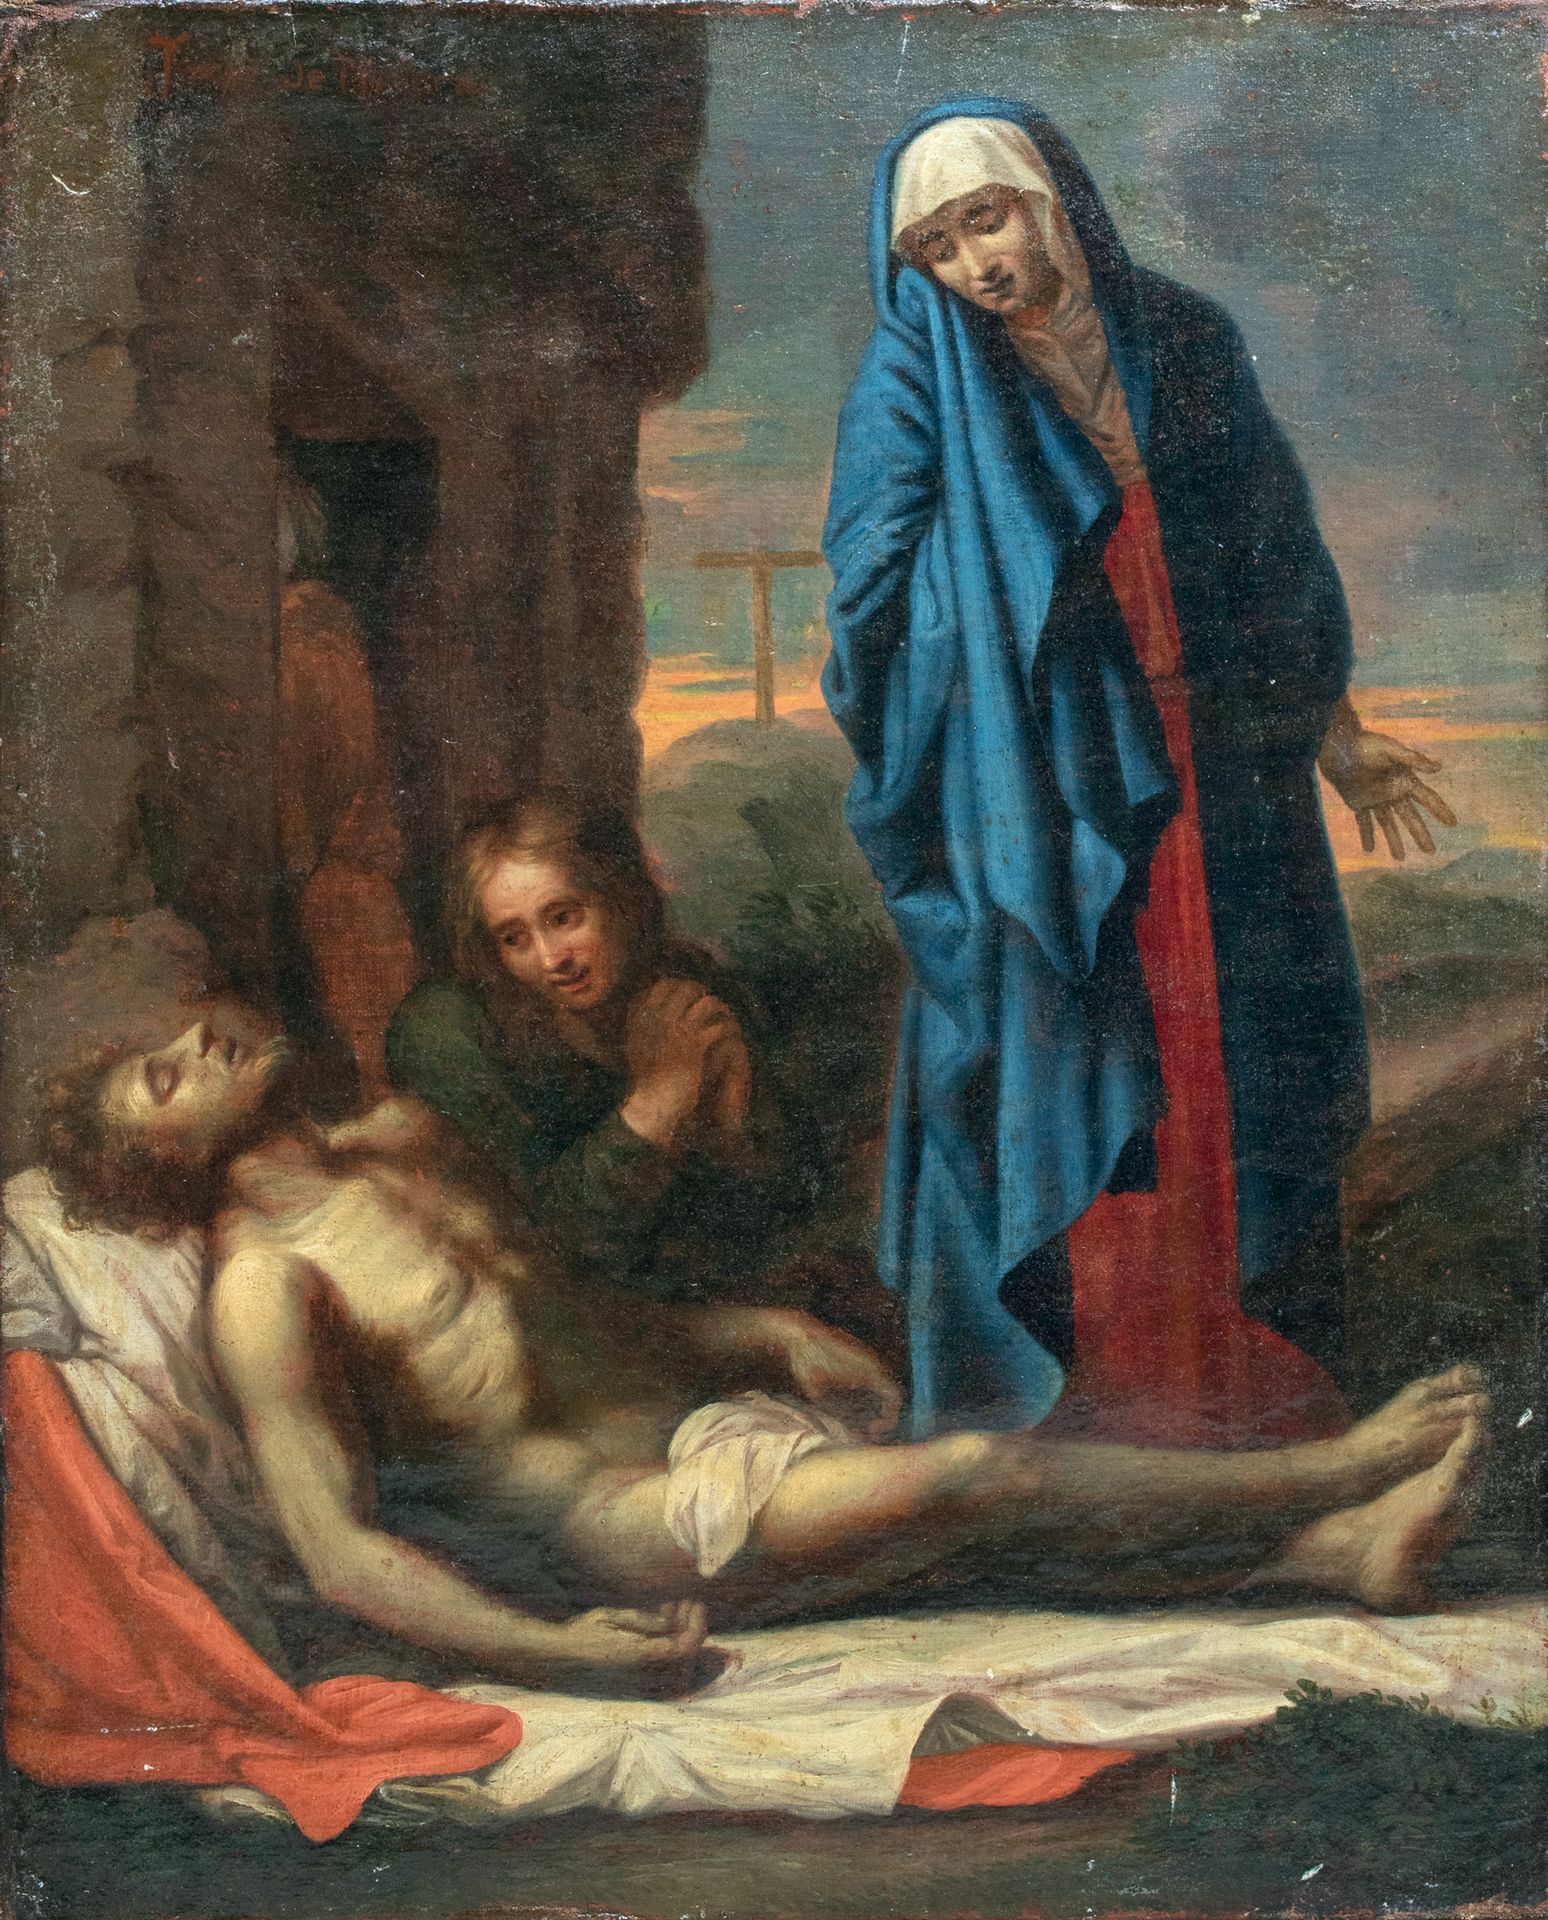 Ecole française XVIIème siècle 基督的堕落
布面油画 48 x 39 cm